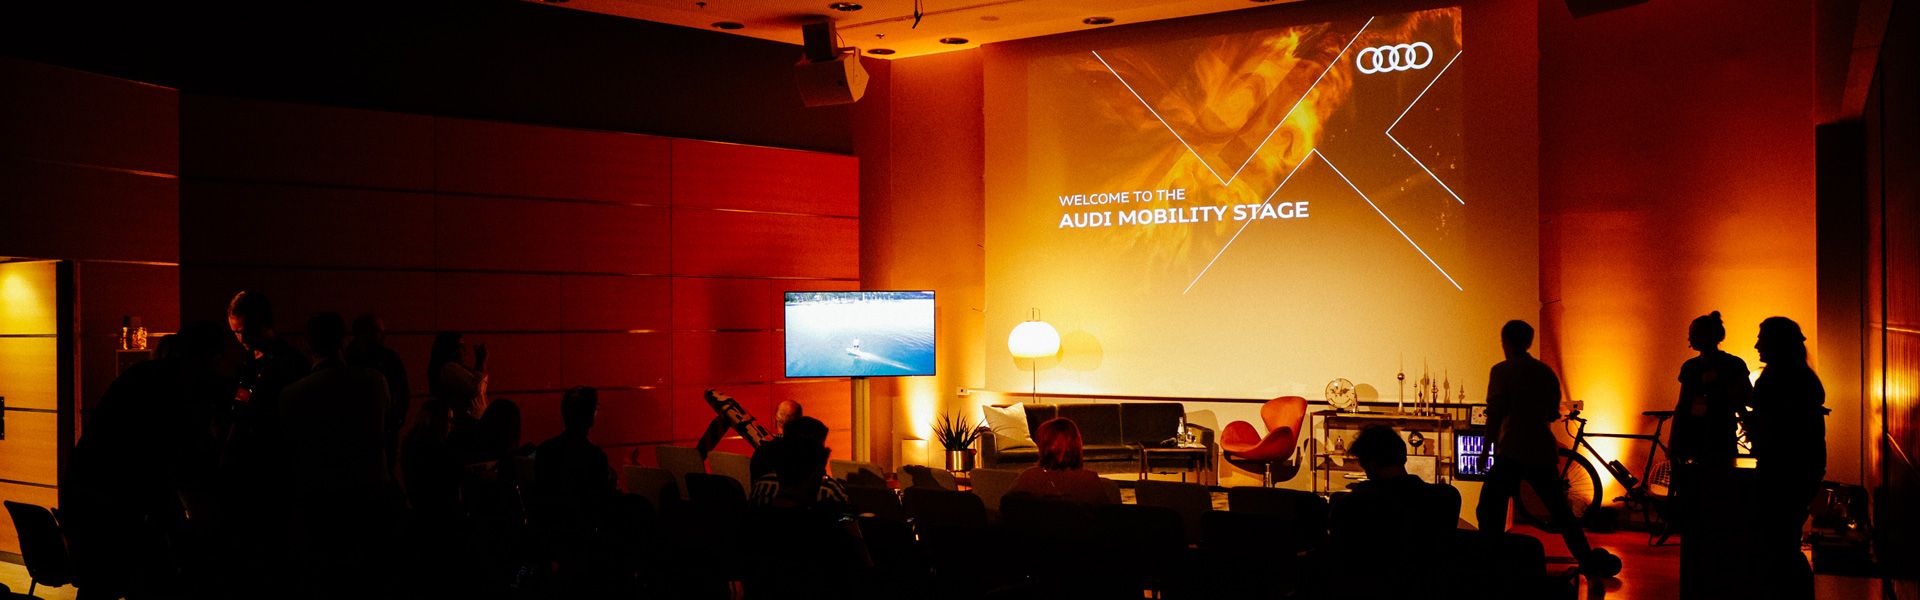 Audi Mobility Stage auf der Bits & Pretzels 2019